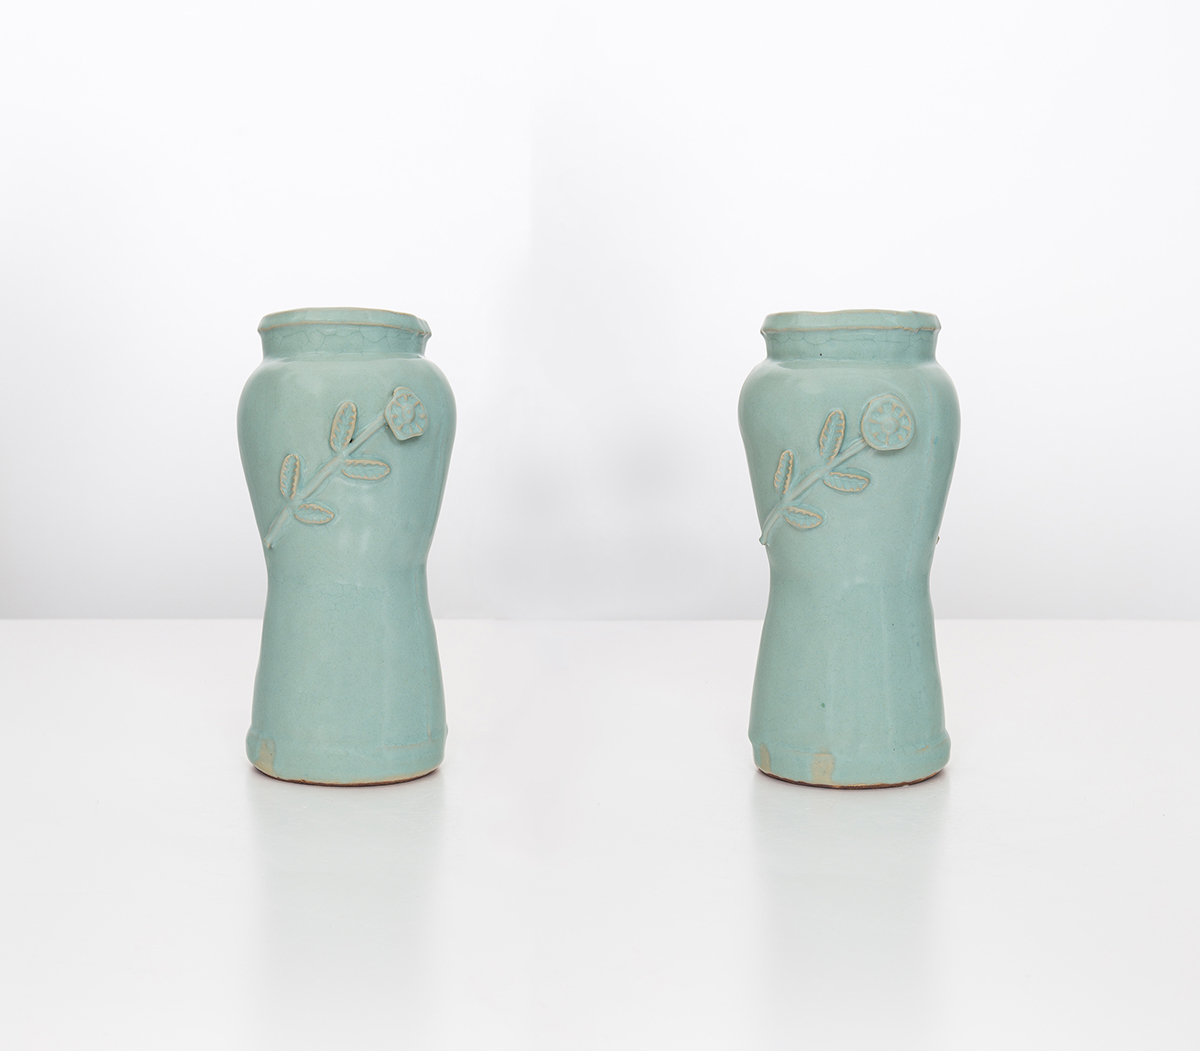 Hylton Nel - Coral blue vases with flower details, 13.2.15, 2015